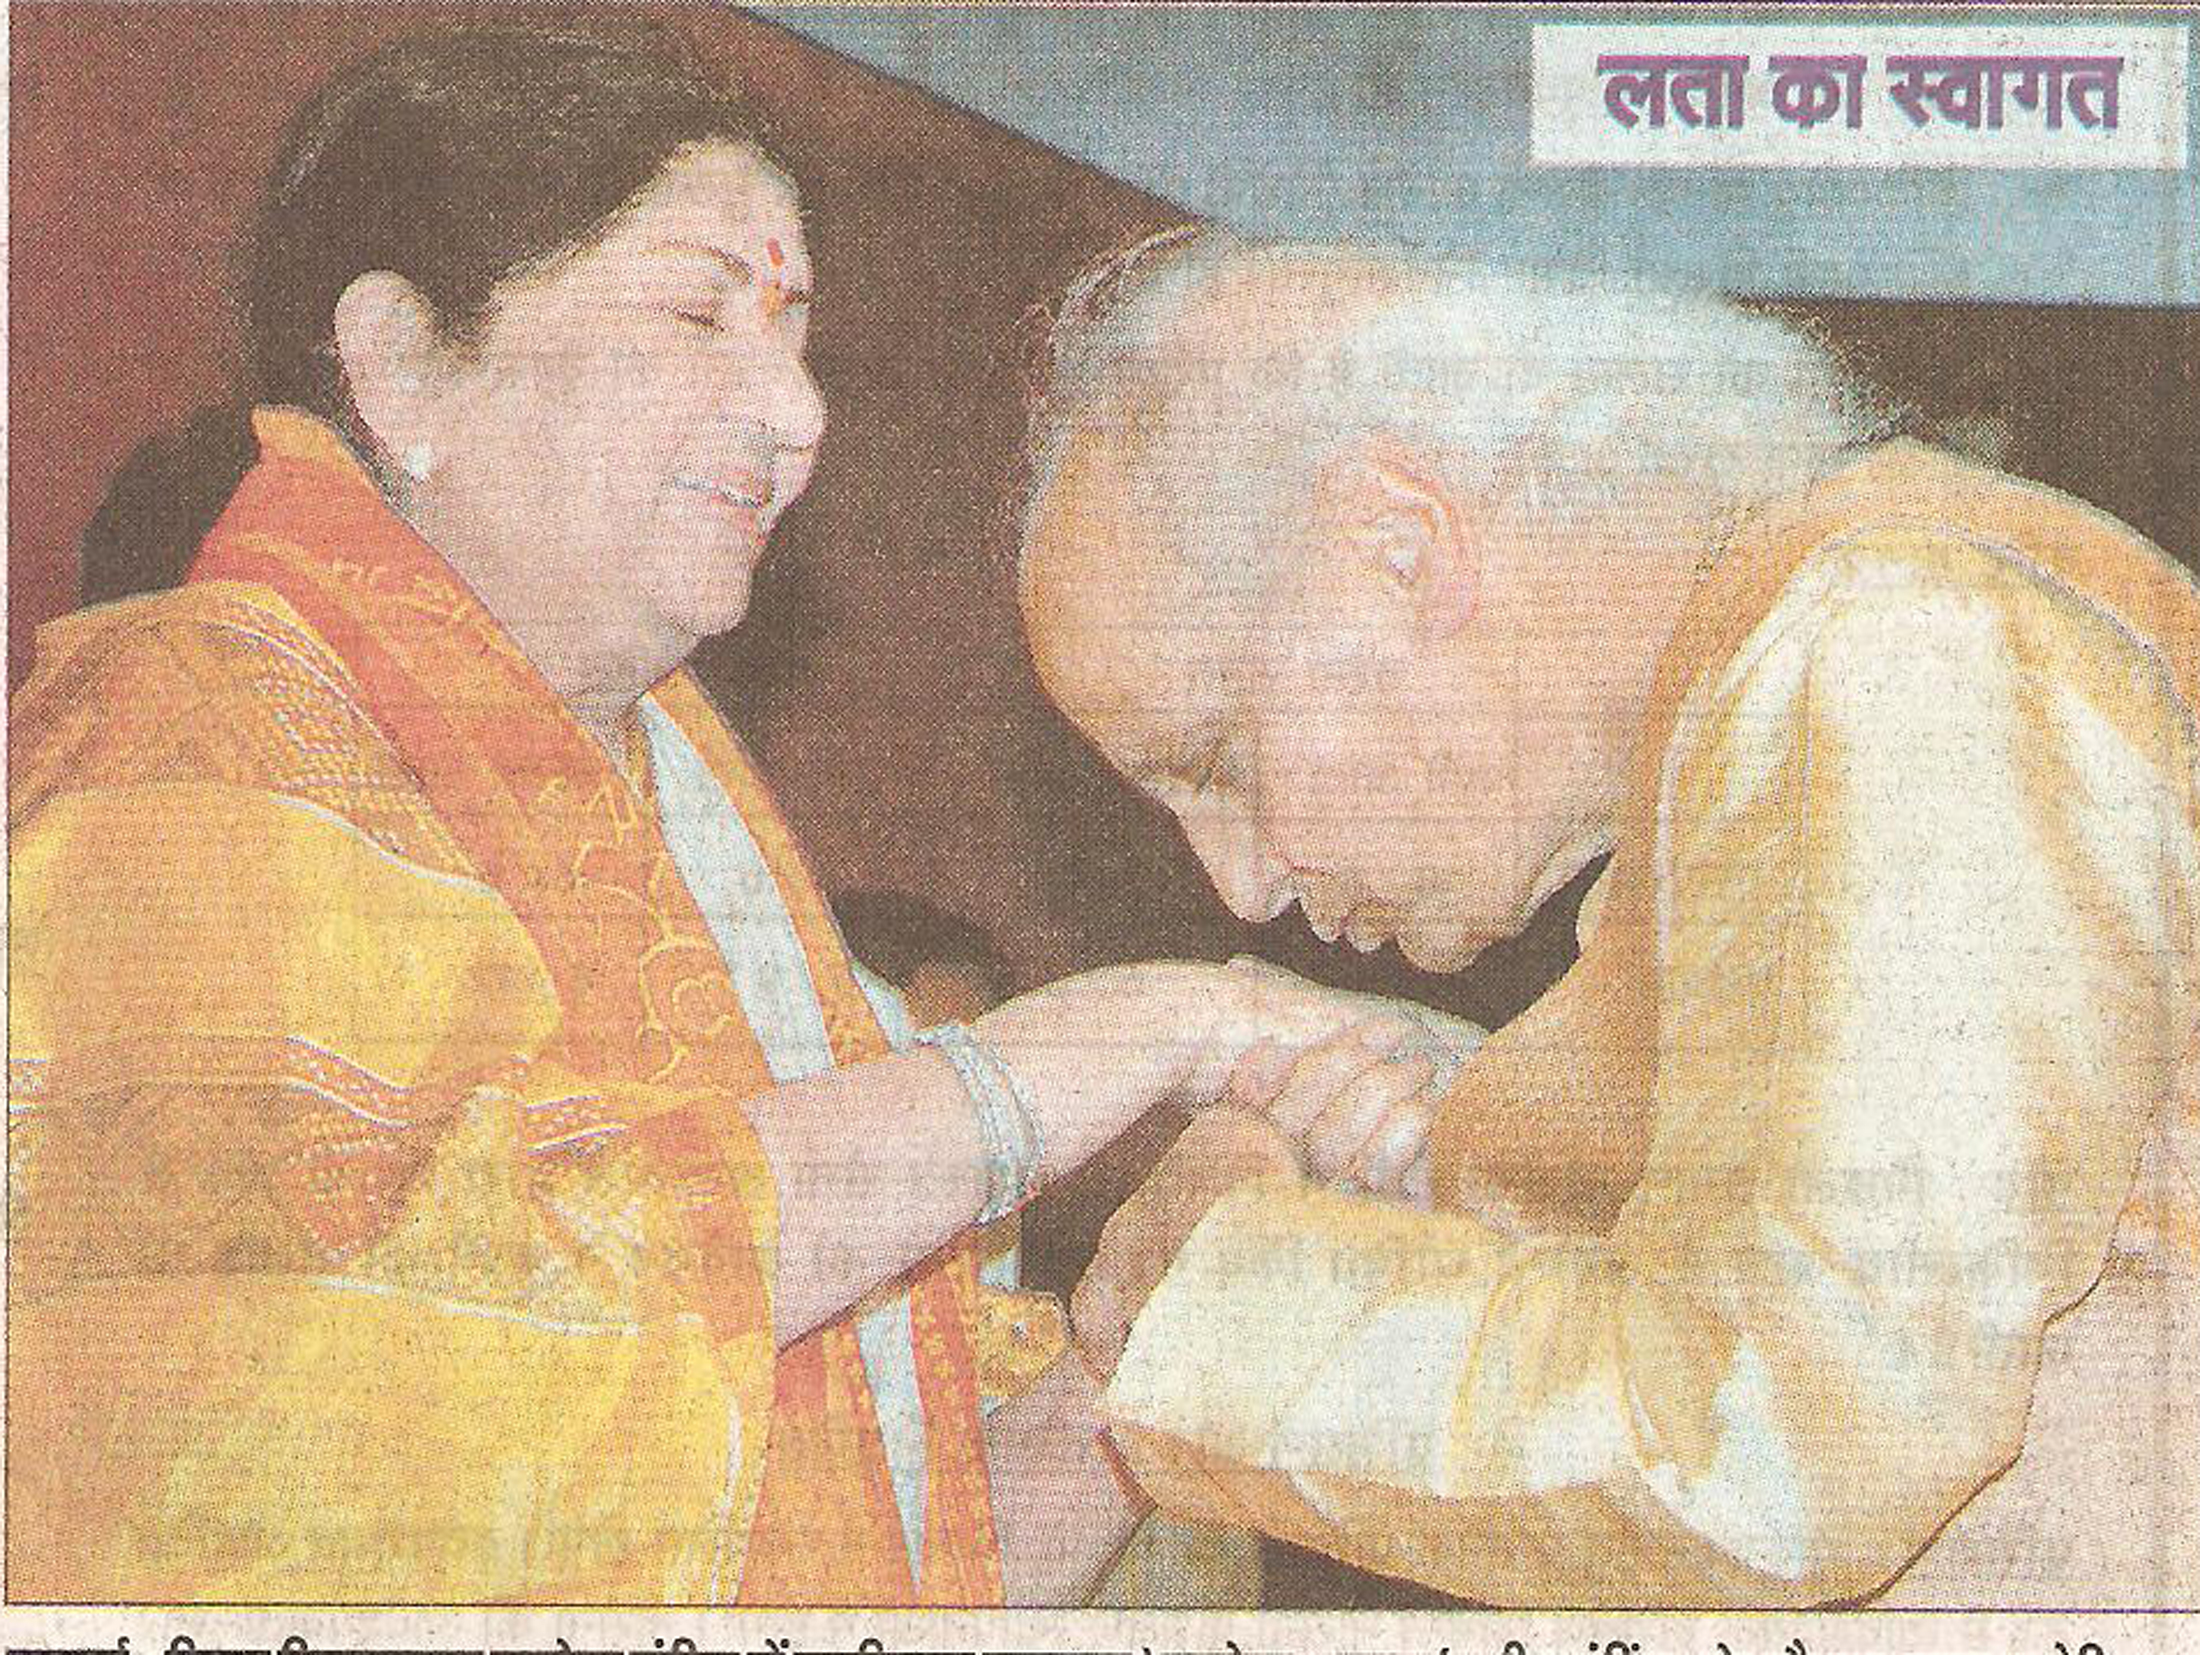 Lata Mangeshkar with the Classical meastro Pandit Jasraj